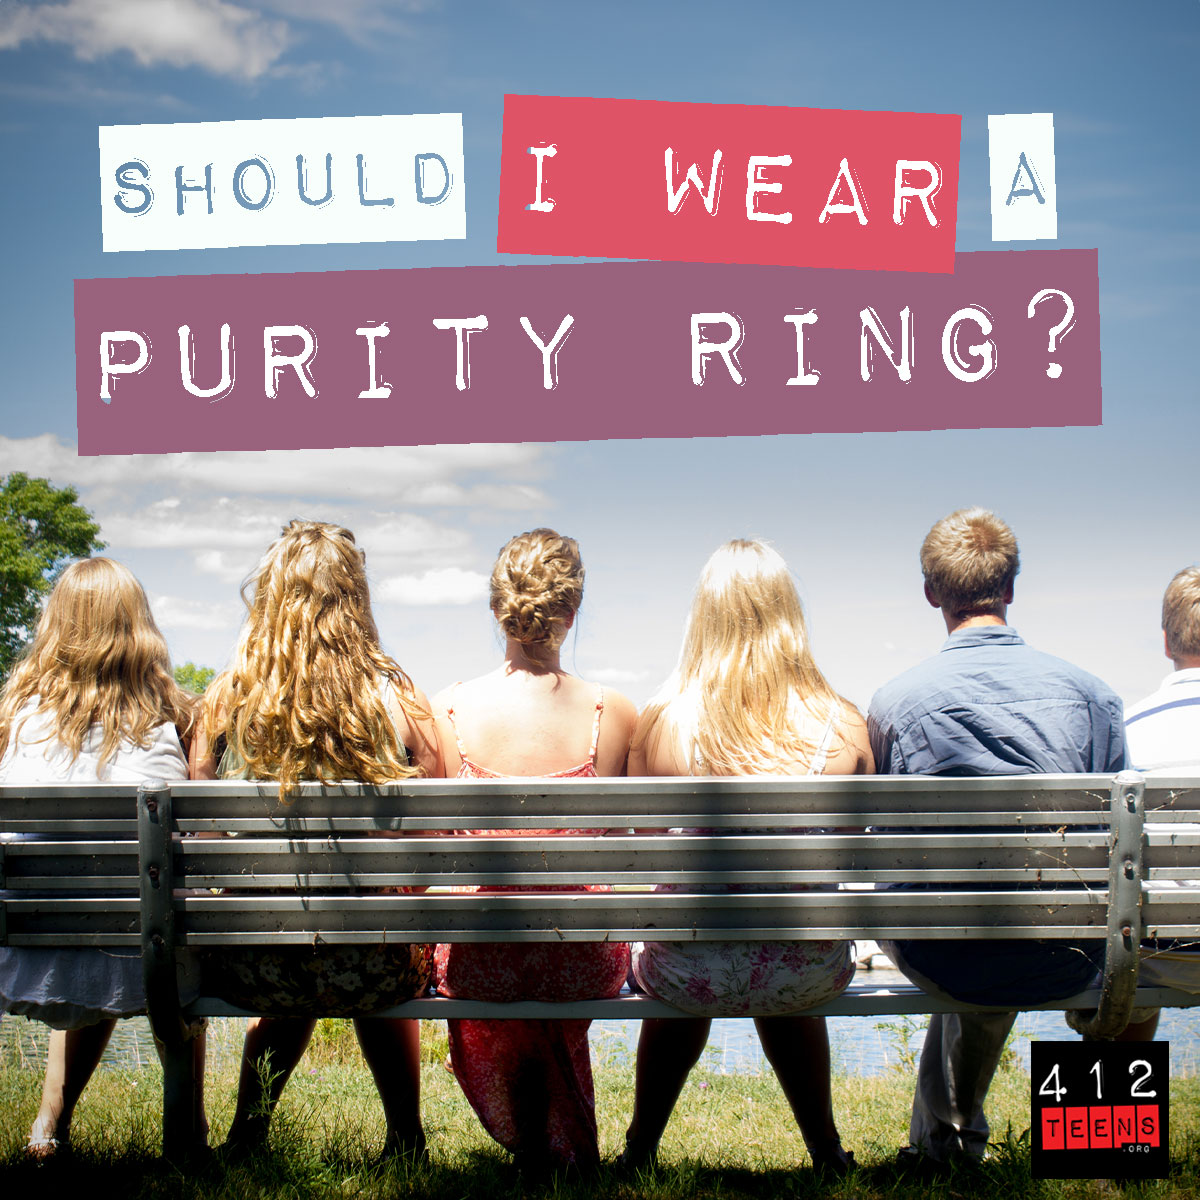 salon kontakt forstene Should I wear a purity ring? | 412teens.org